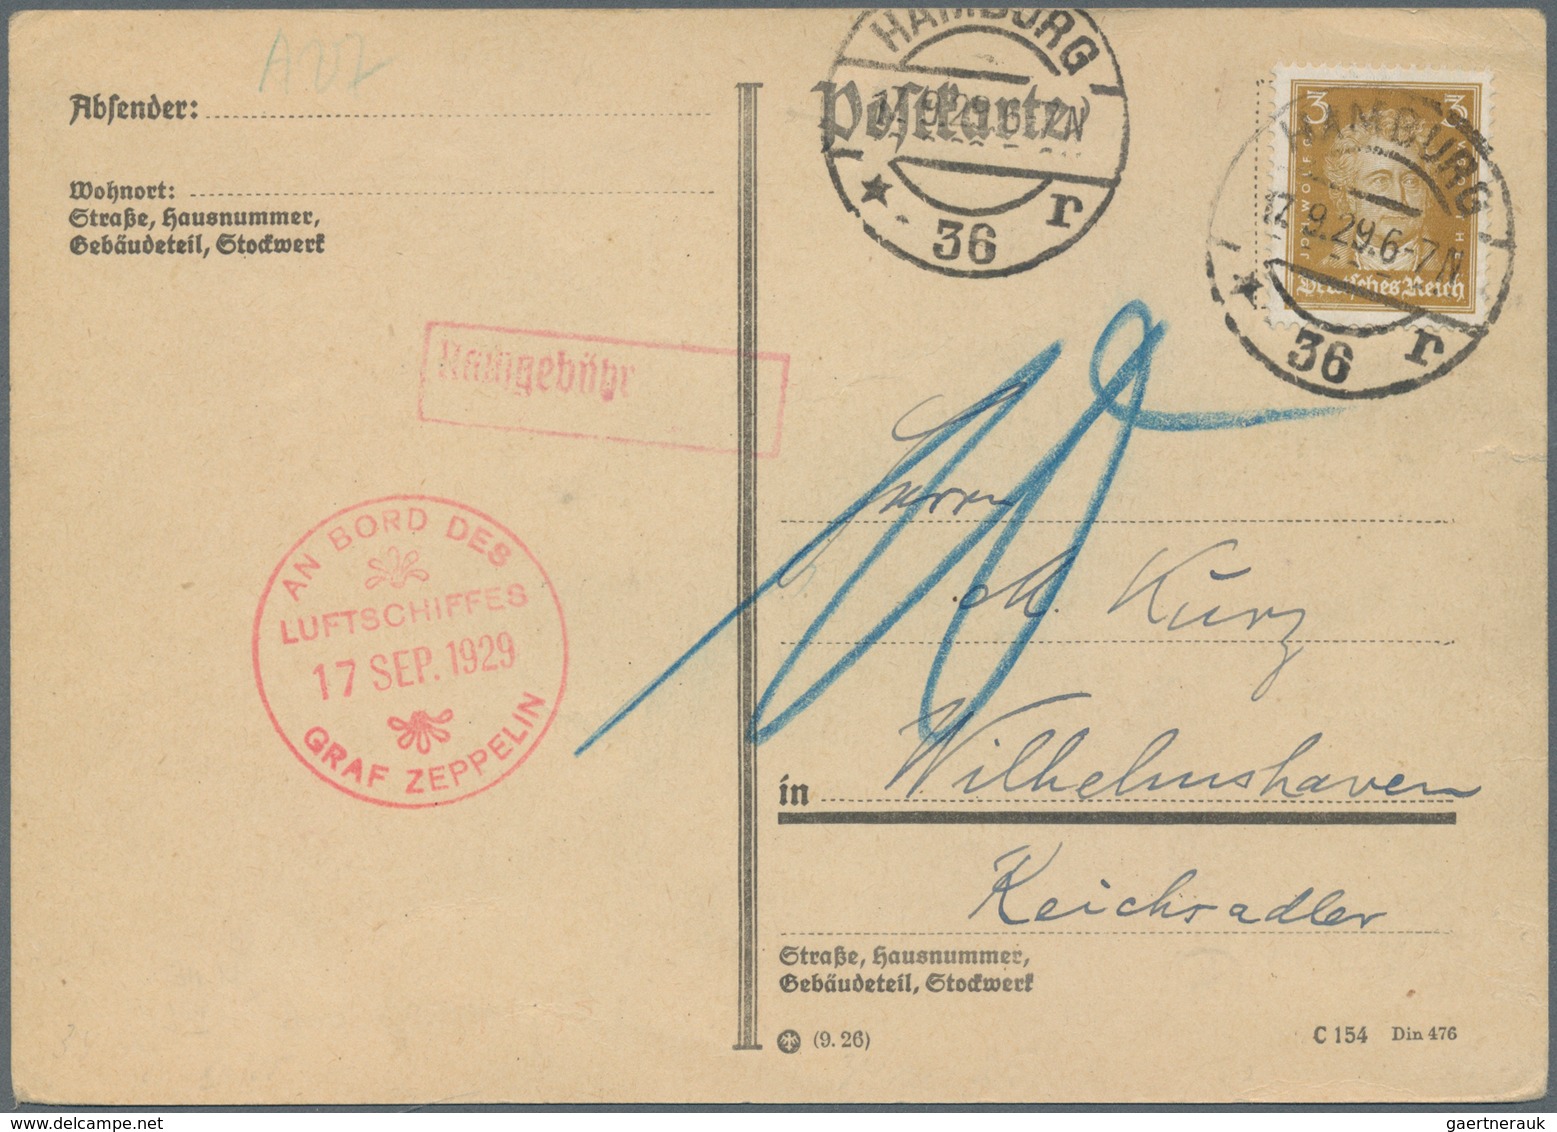 Zeppelinpost Deutschland: 1929. German Postcard Flown On The Graf Zeppelin LZ127 Airship's 1929 Deut - Correo Aéreo & Zeppelin